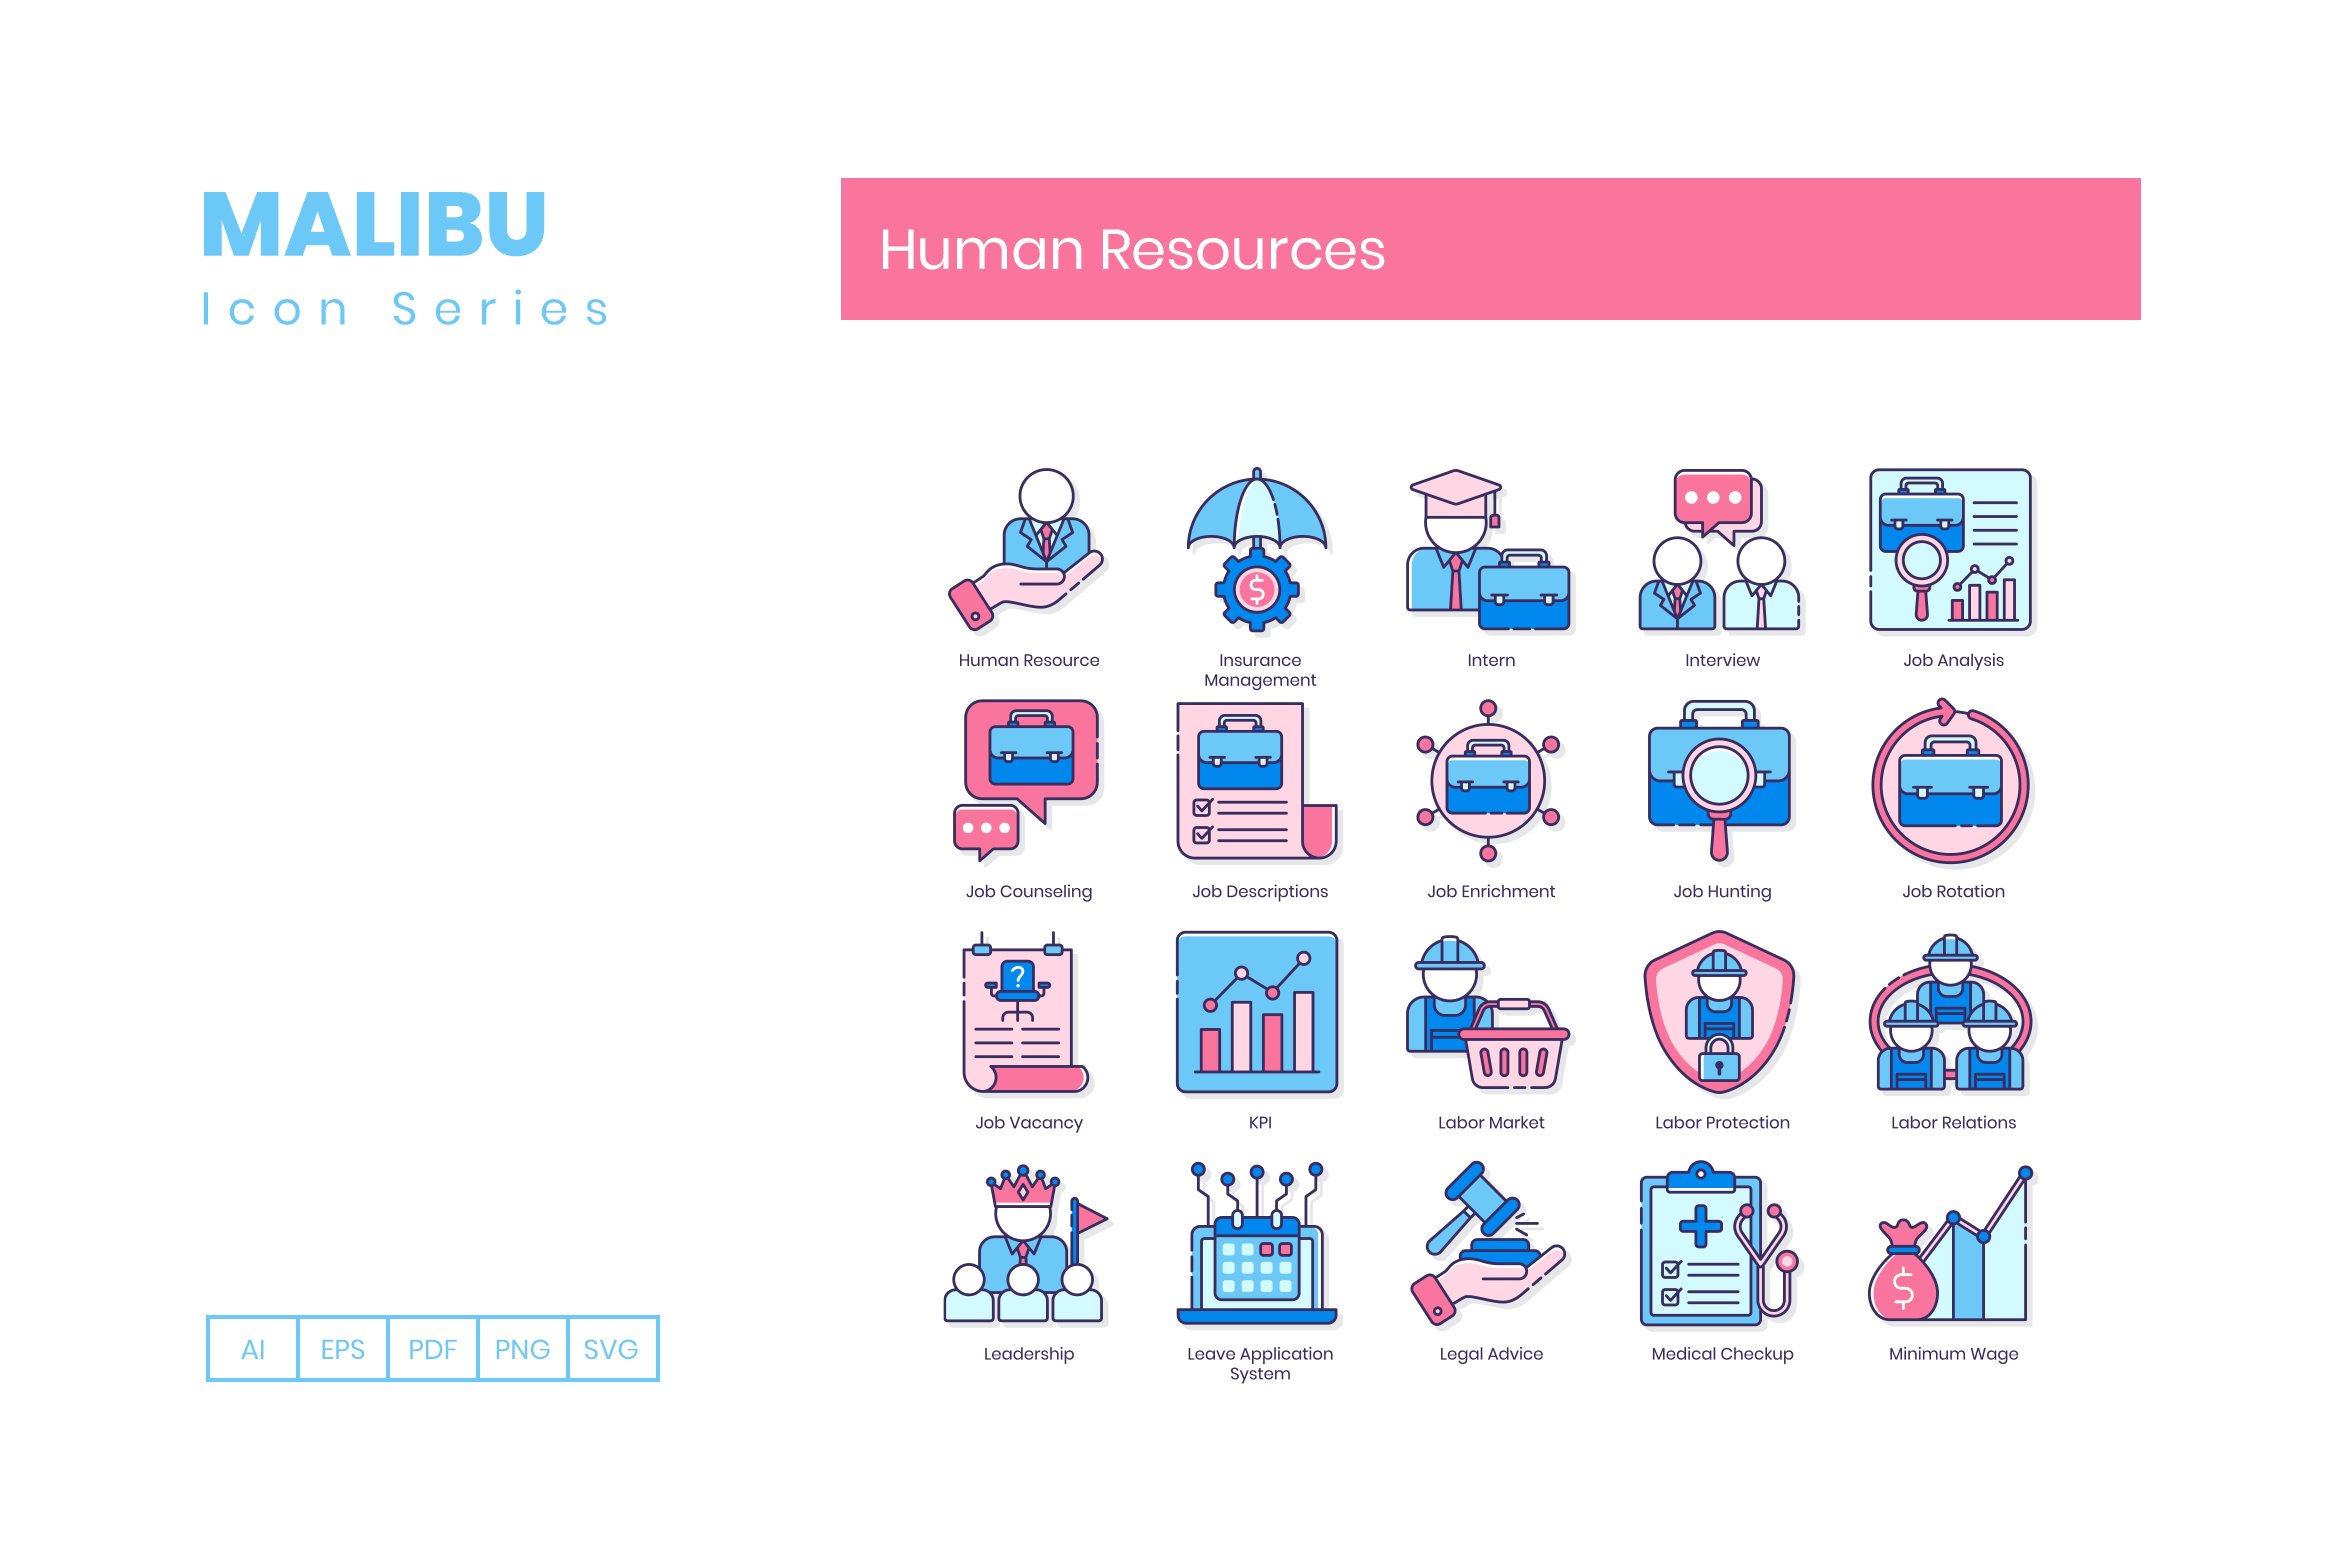 100 Human Resources Icons - Malibu preview image.